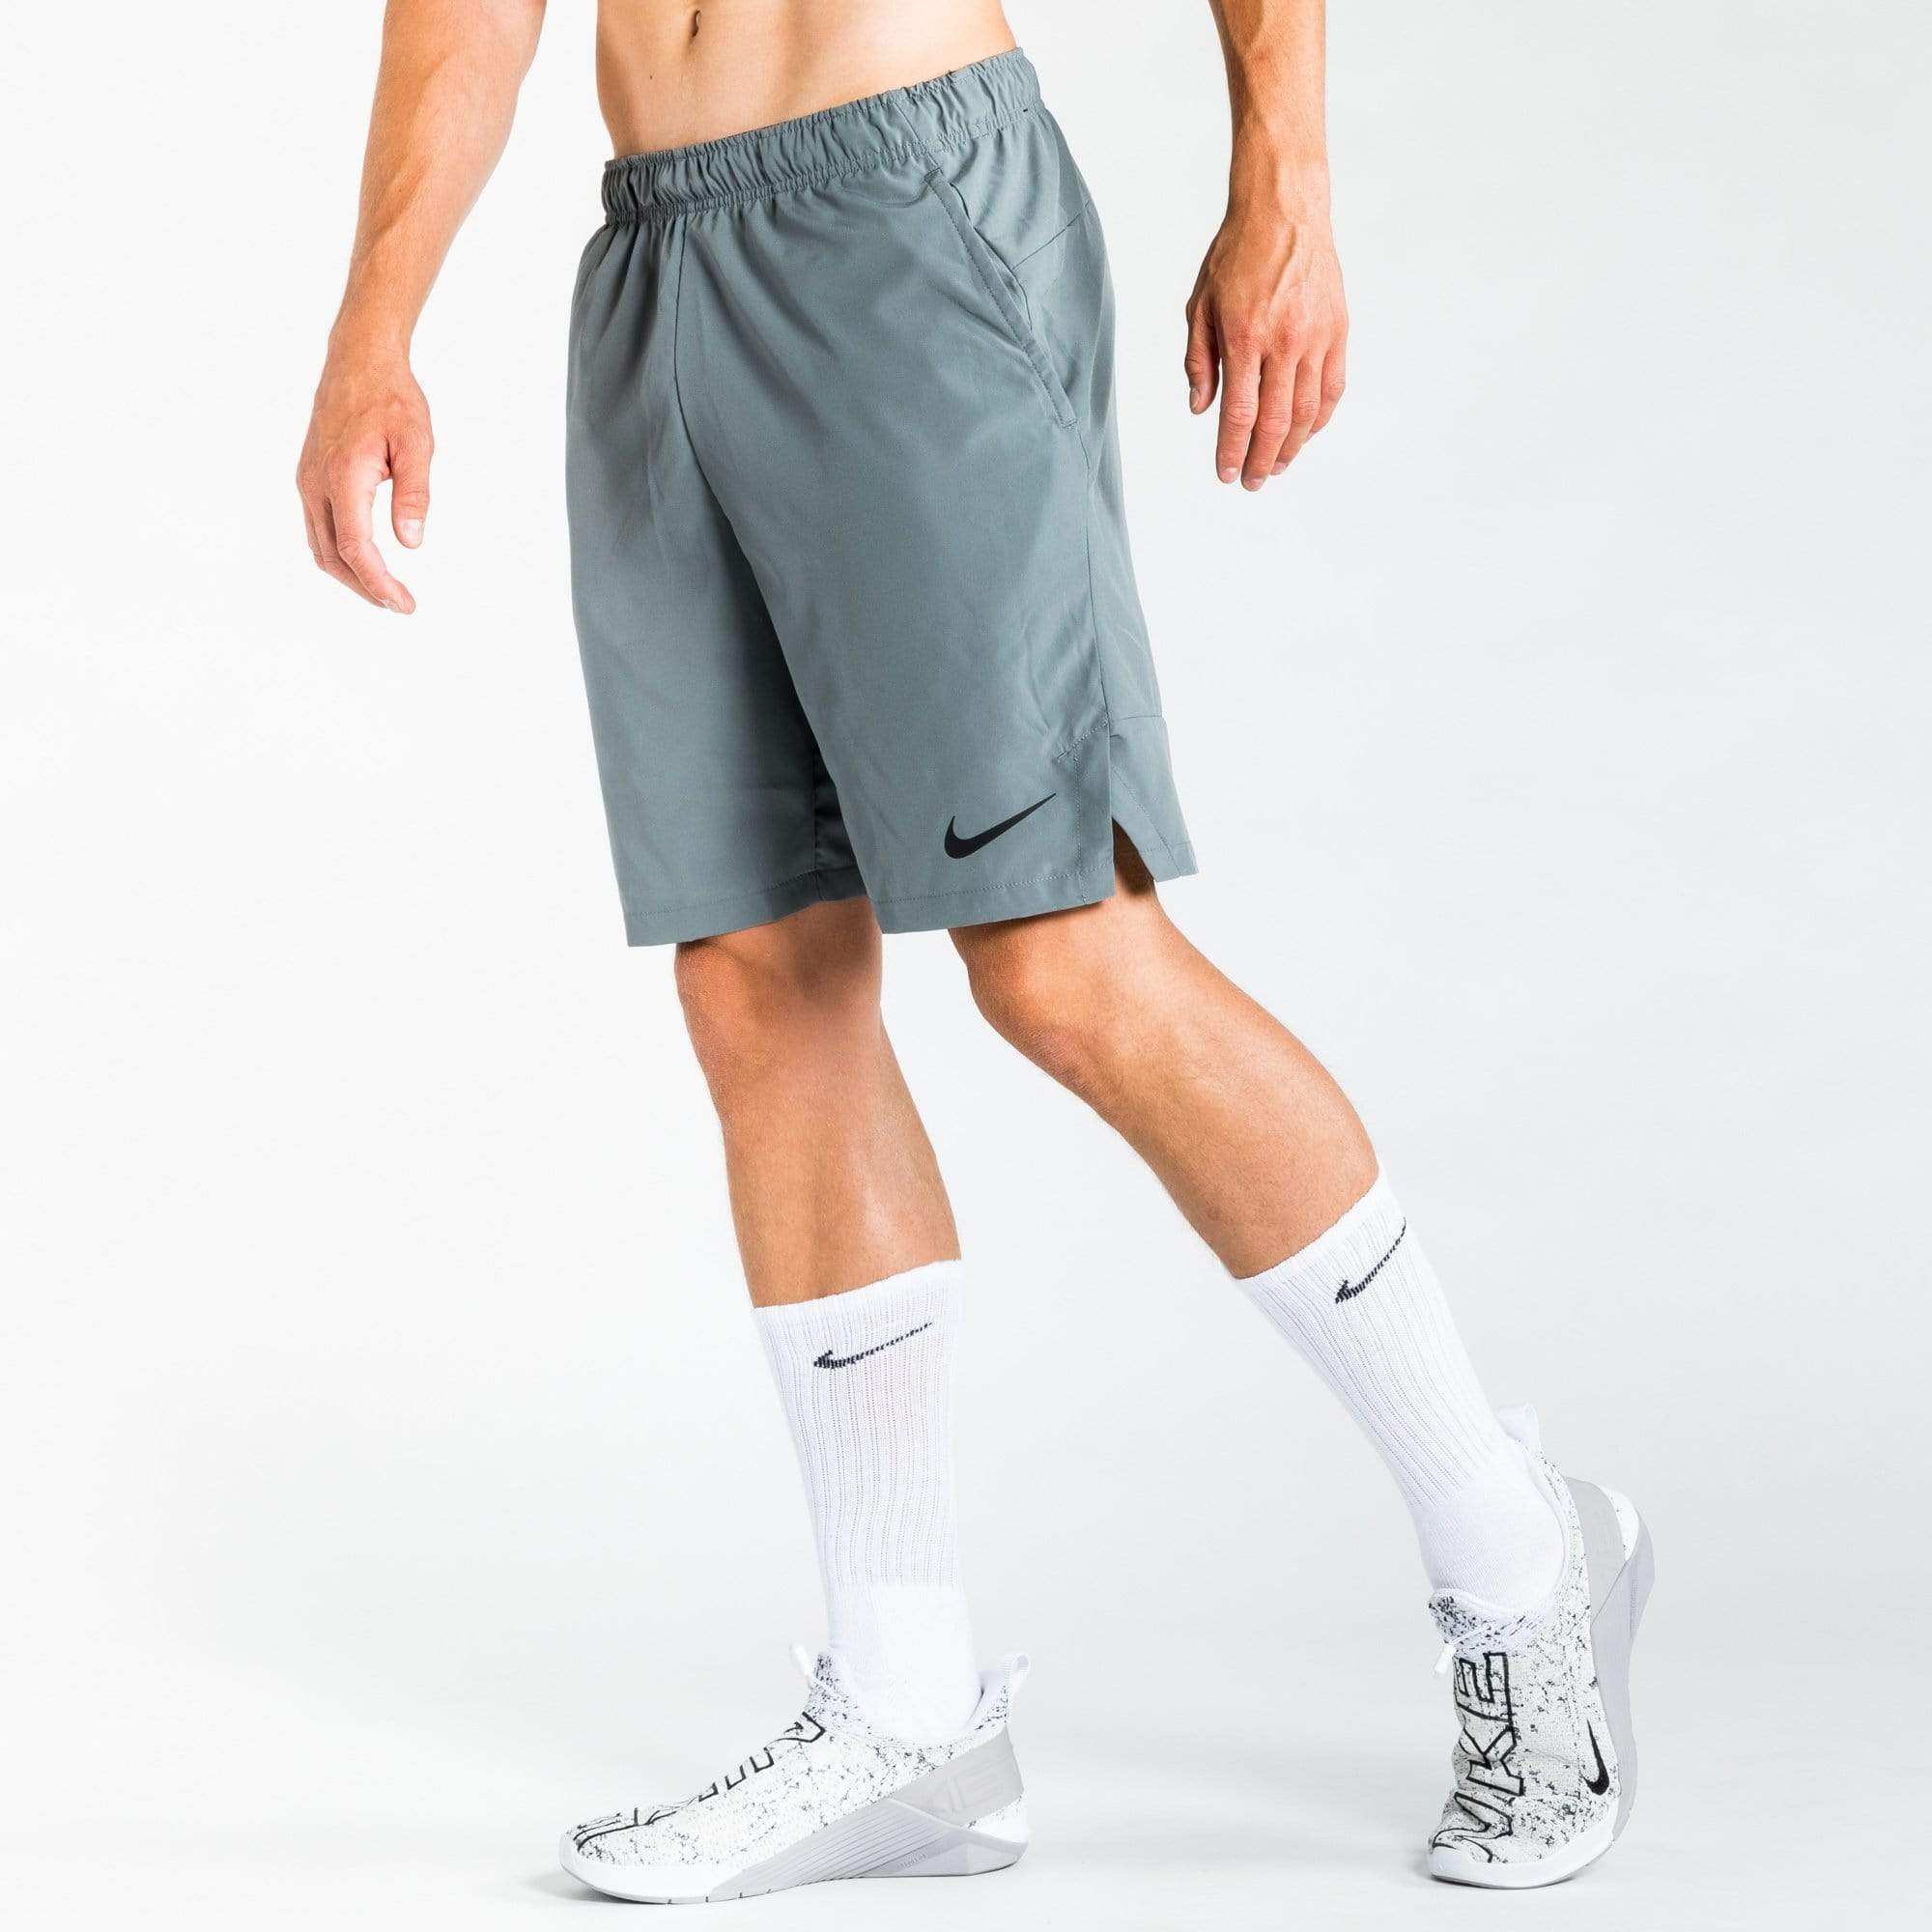 flex woven shorts mens